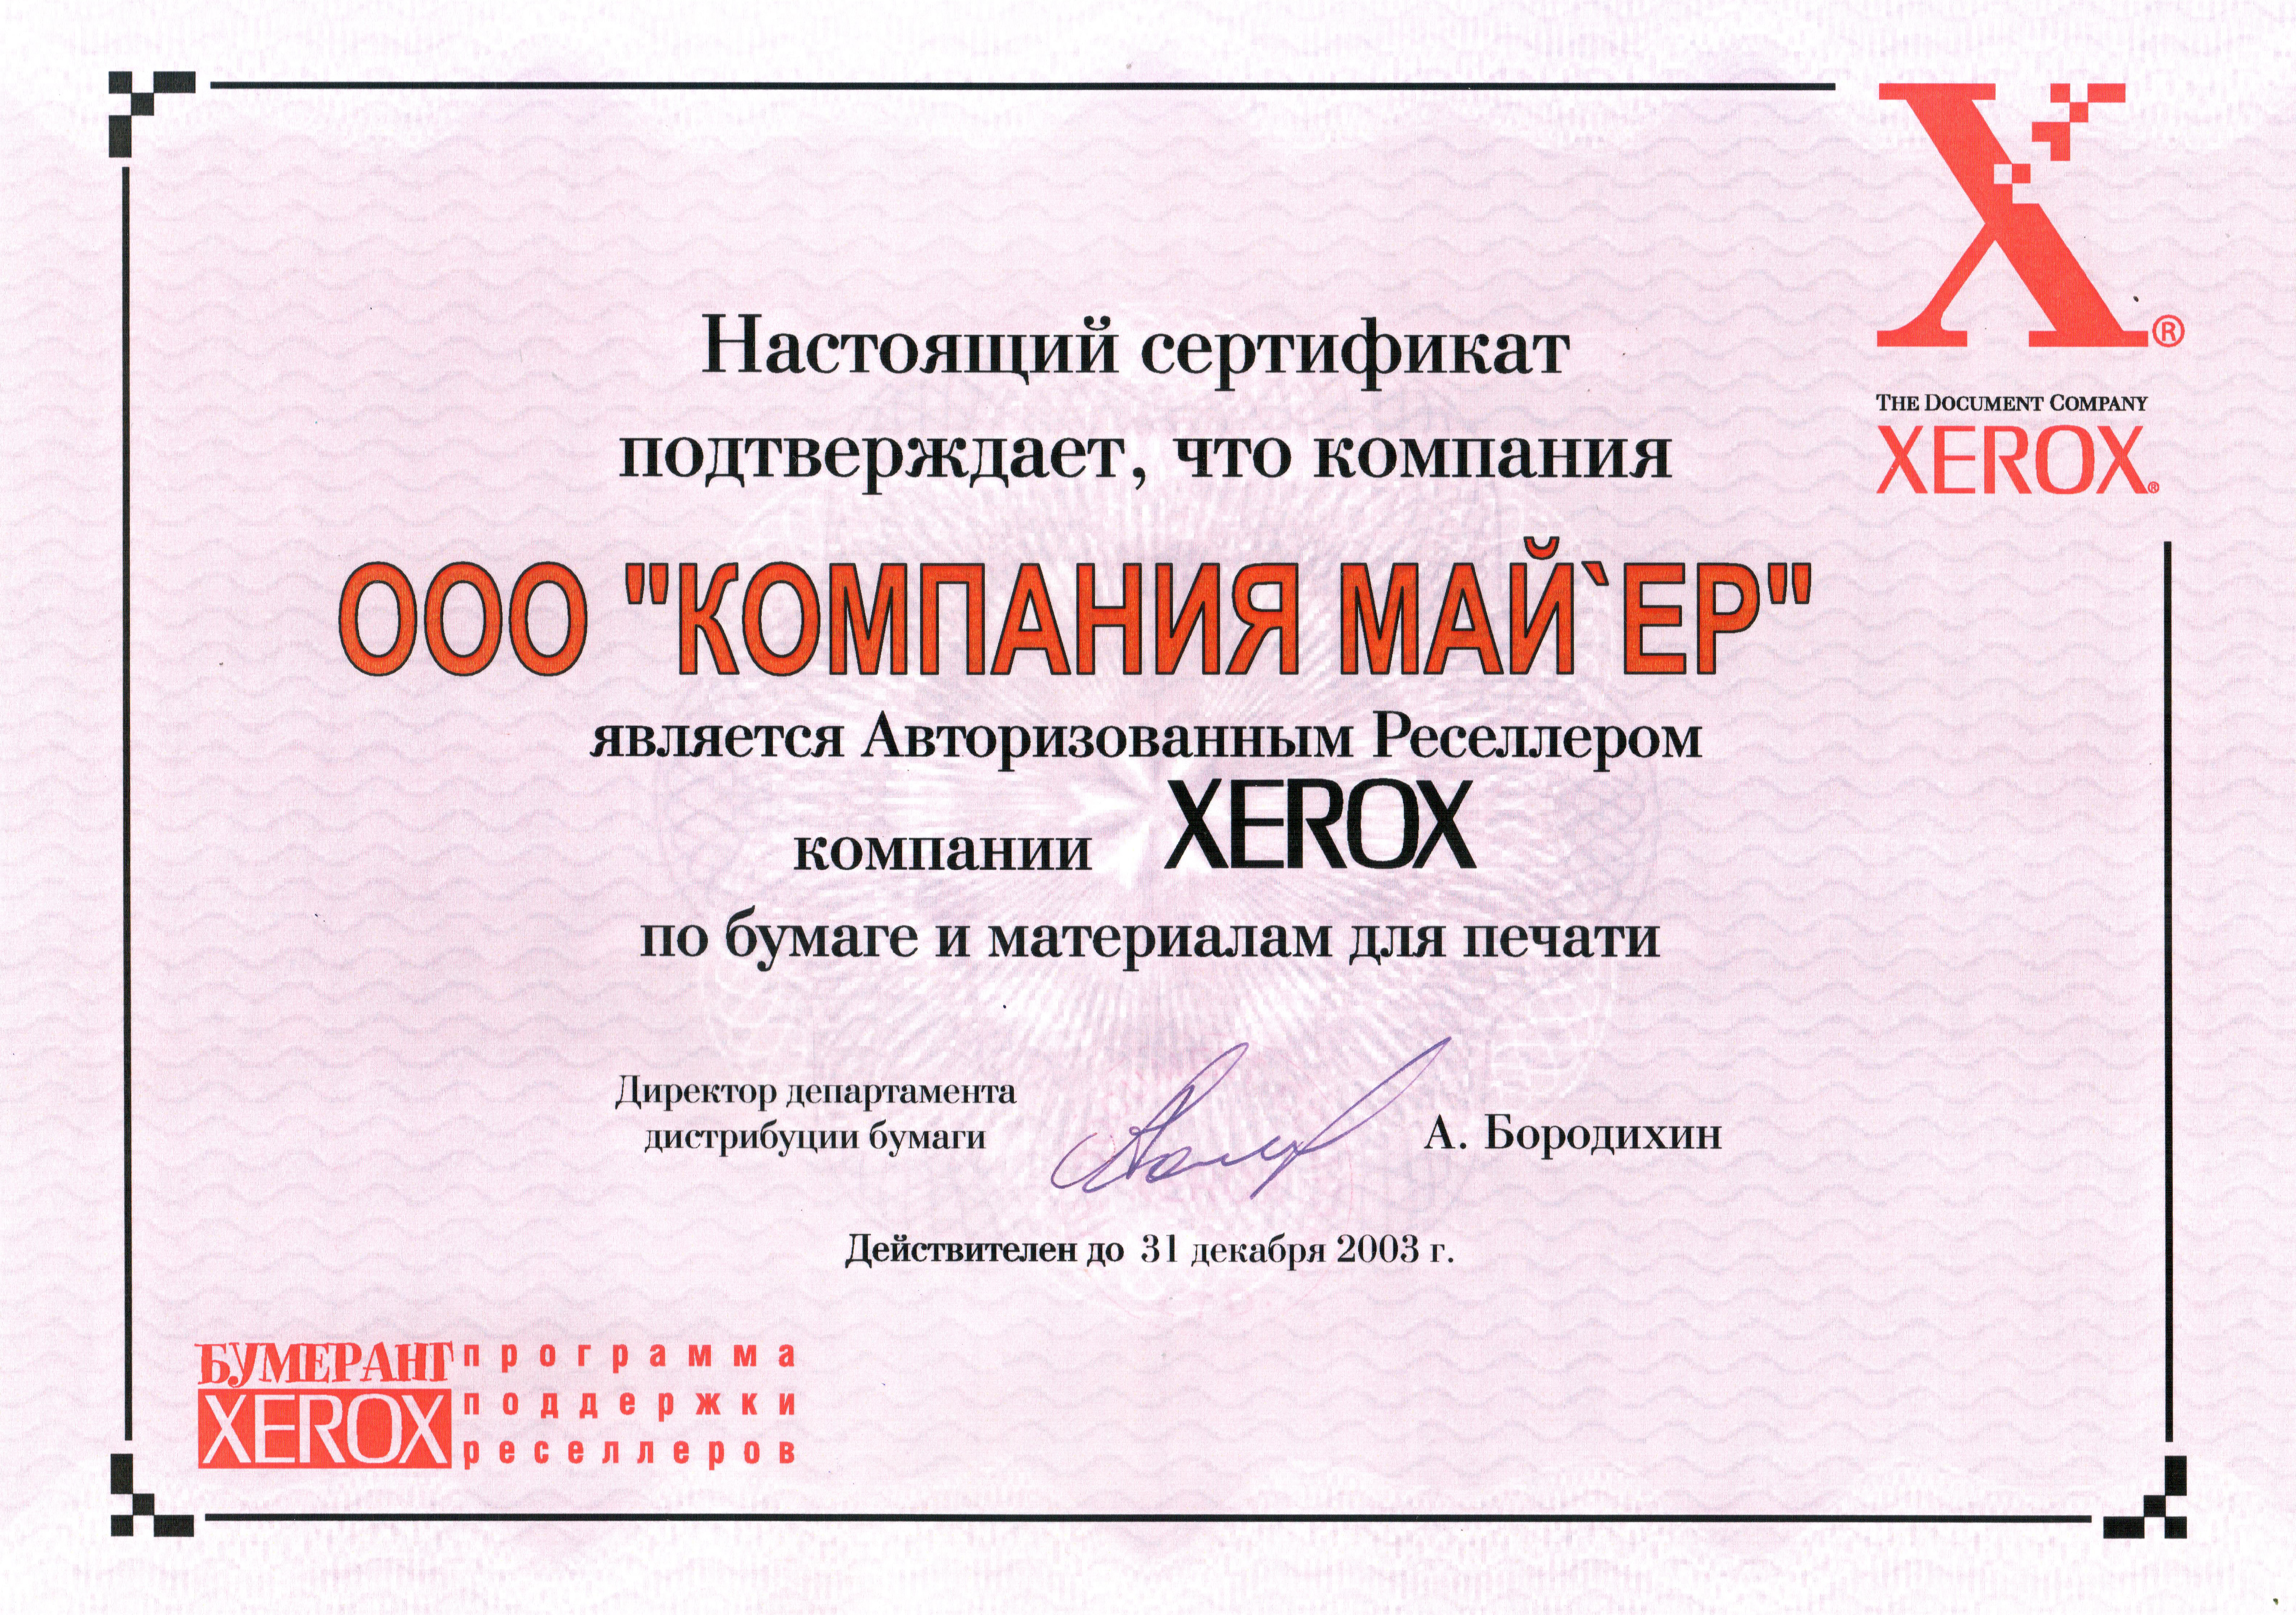 2003 РЕСЕЛЛЕР XEROX